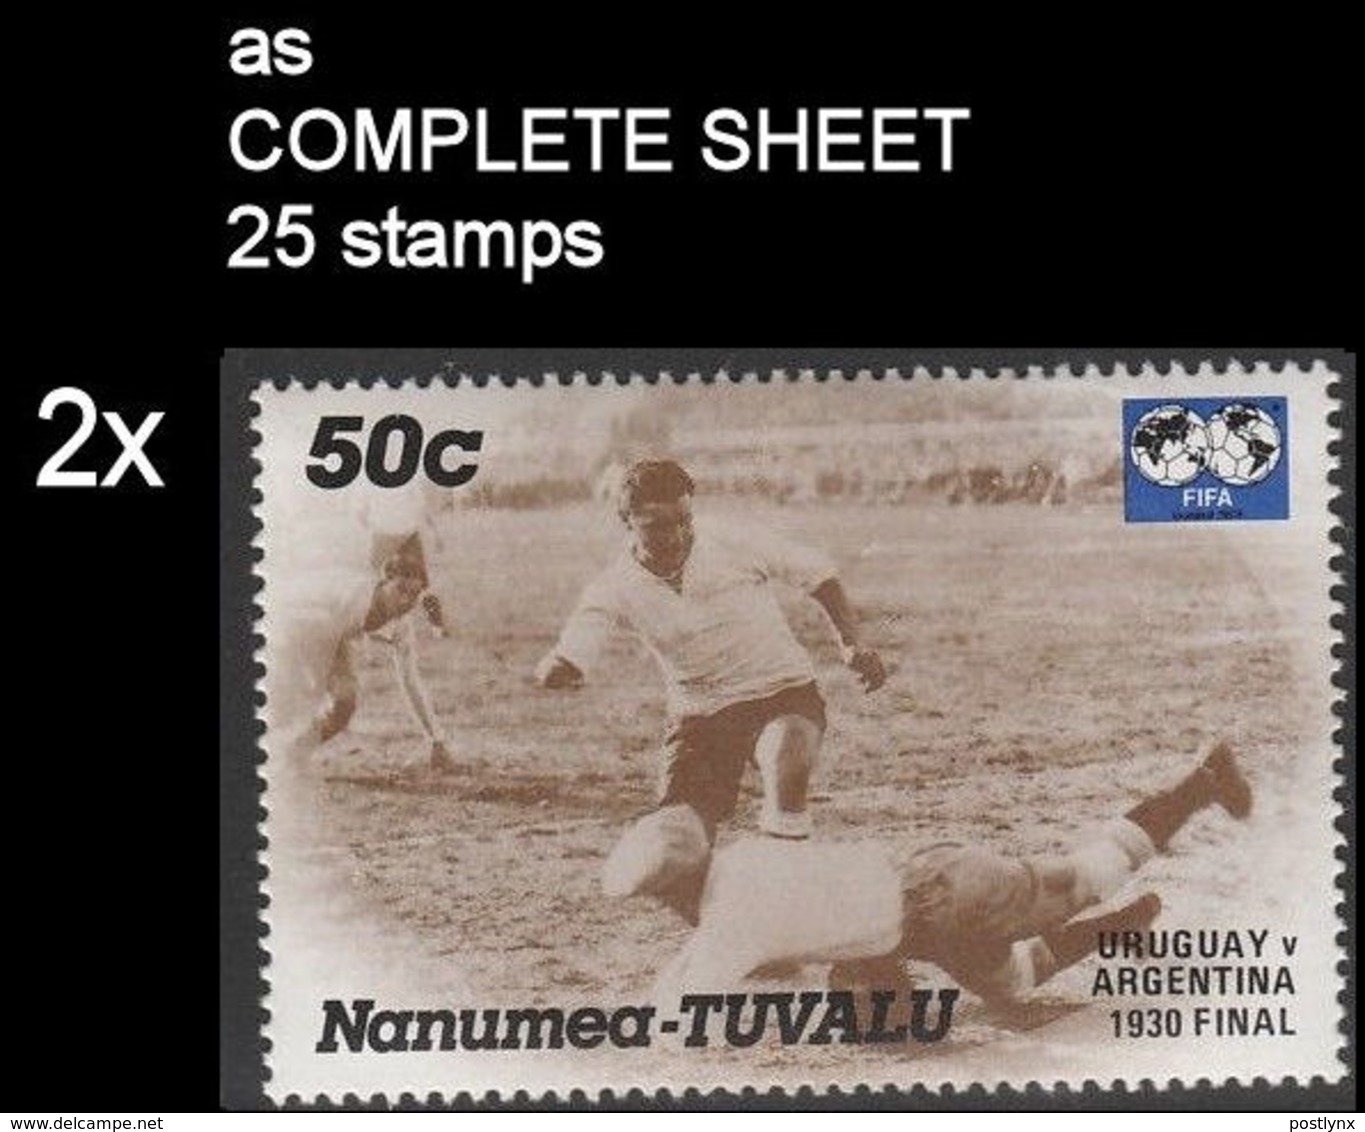 CV:€17.80 BULK 2 X TUVALU-Nanumea 1986 World Cup Mexico Final Uruguay Argentina 1930 1930 50c COMPLETE SHEET:25 Stamps - 1930 – Uruguay